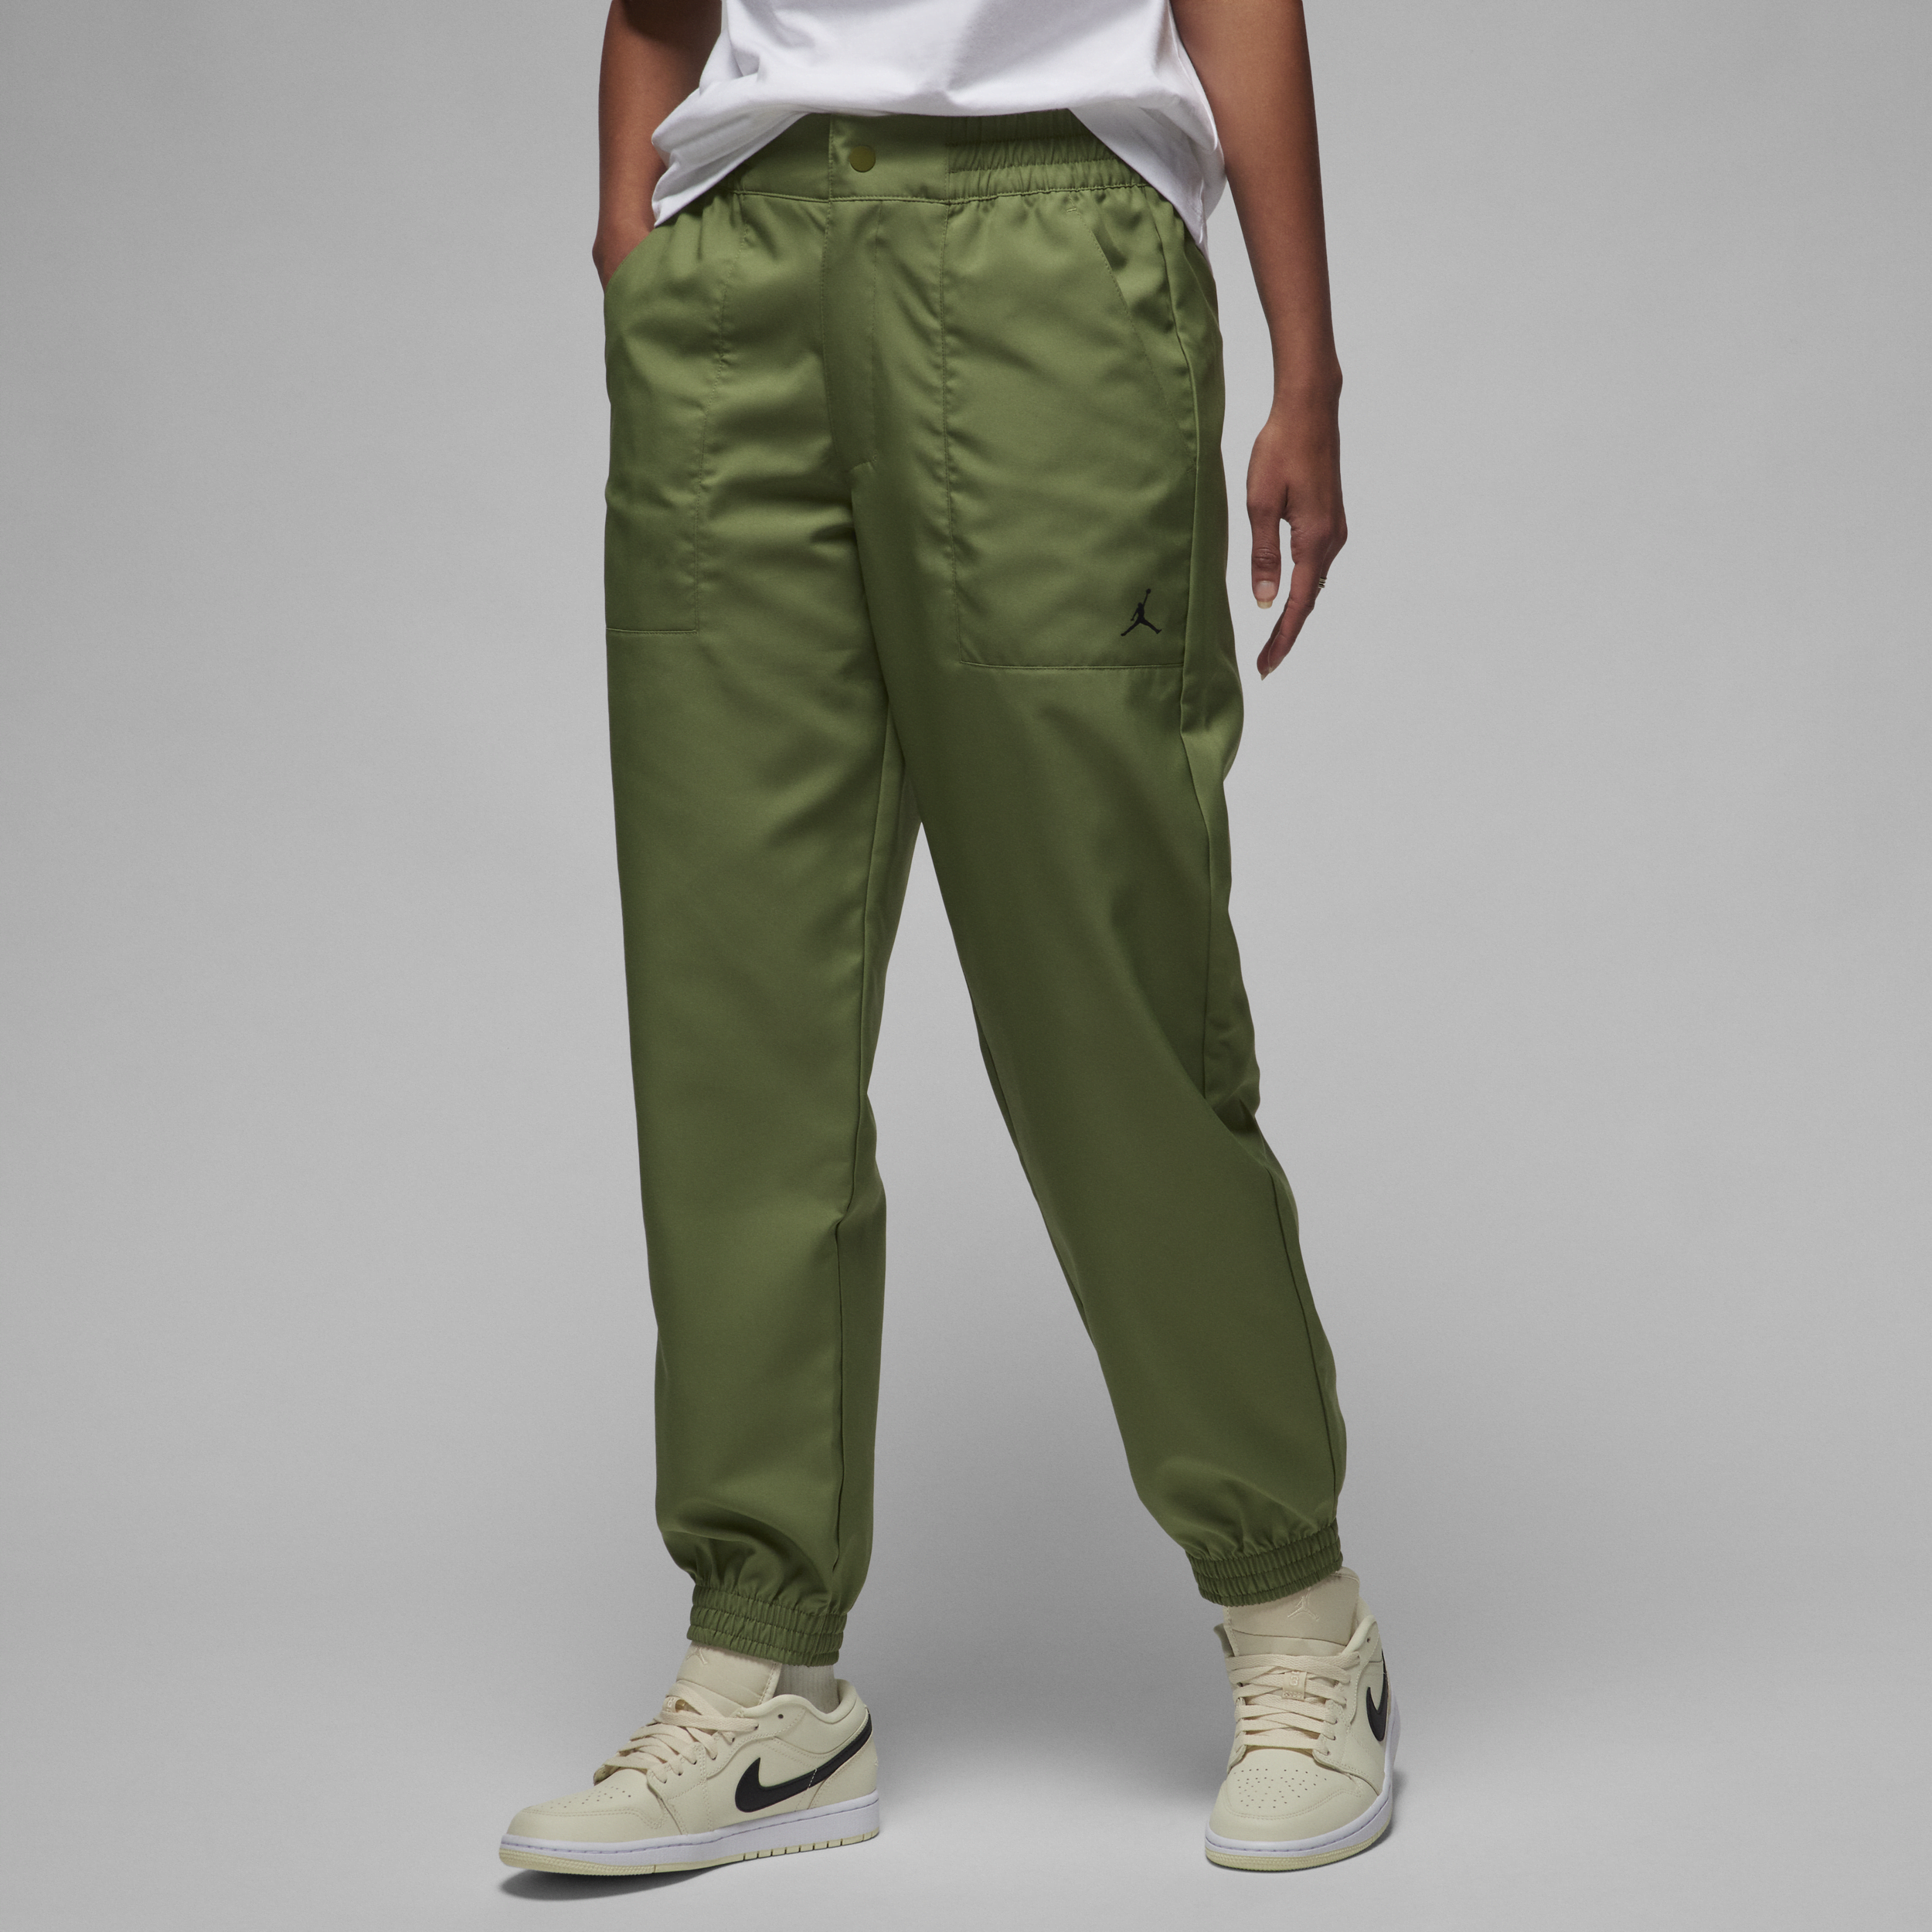 Jordan Pantalón de tejido Woven - Mujer - Verde